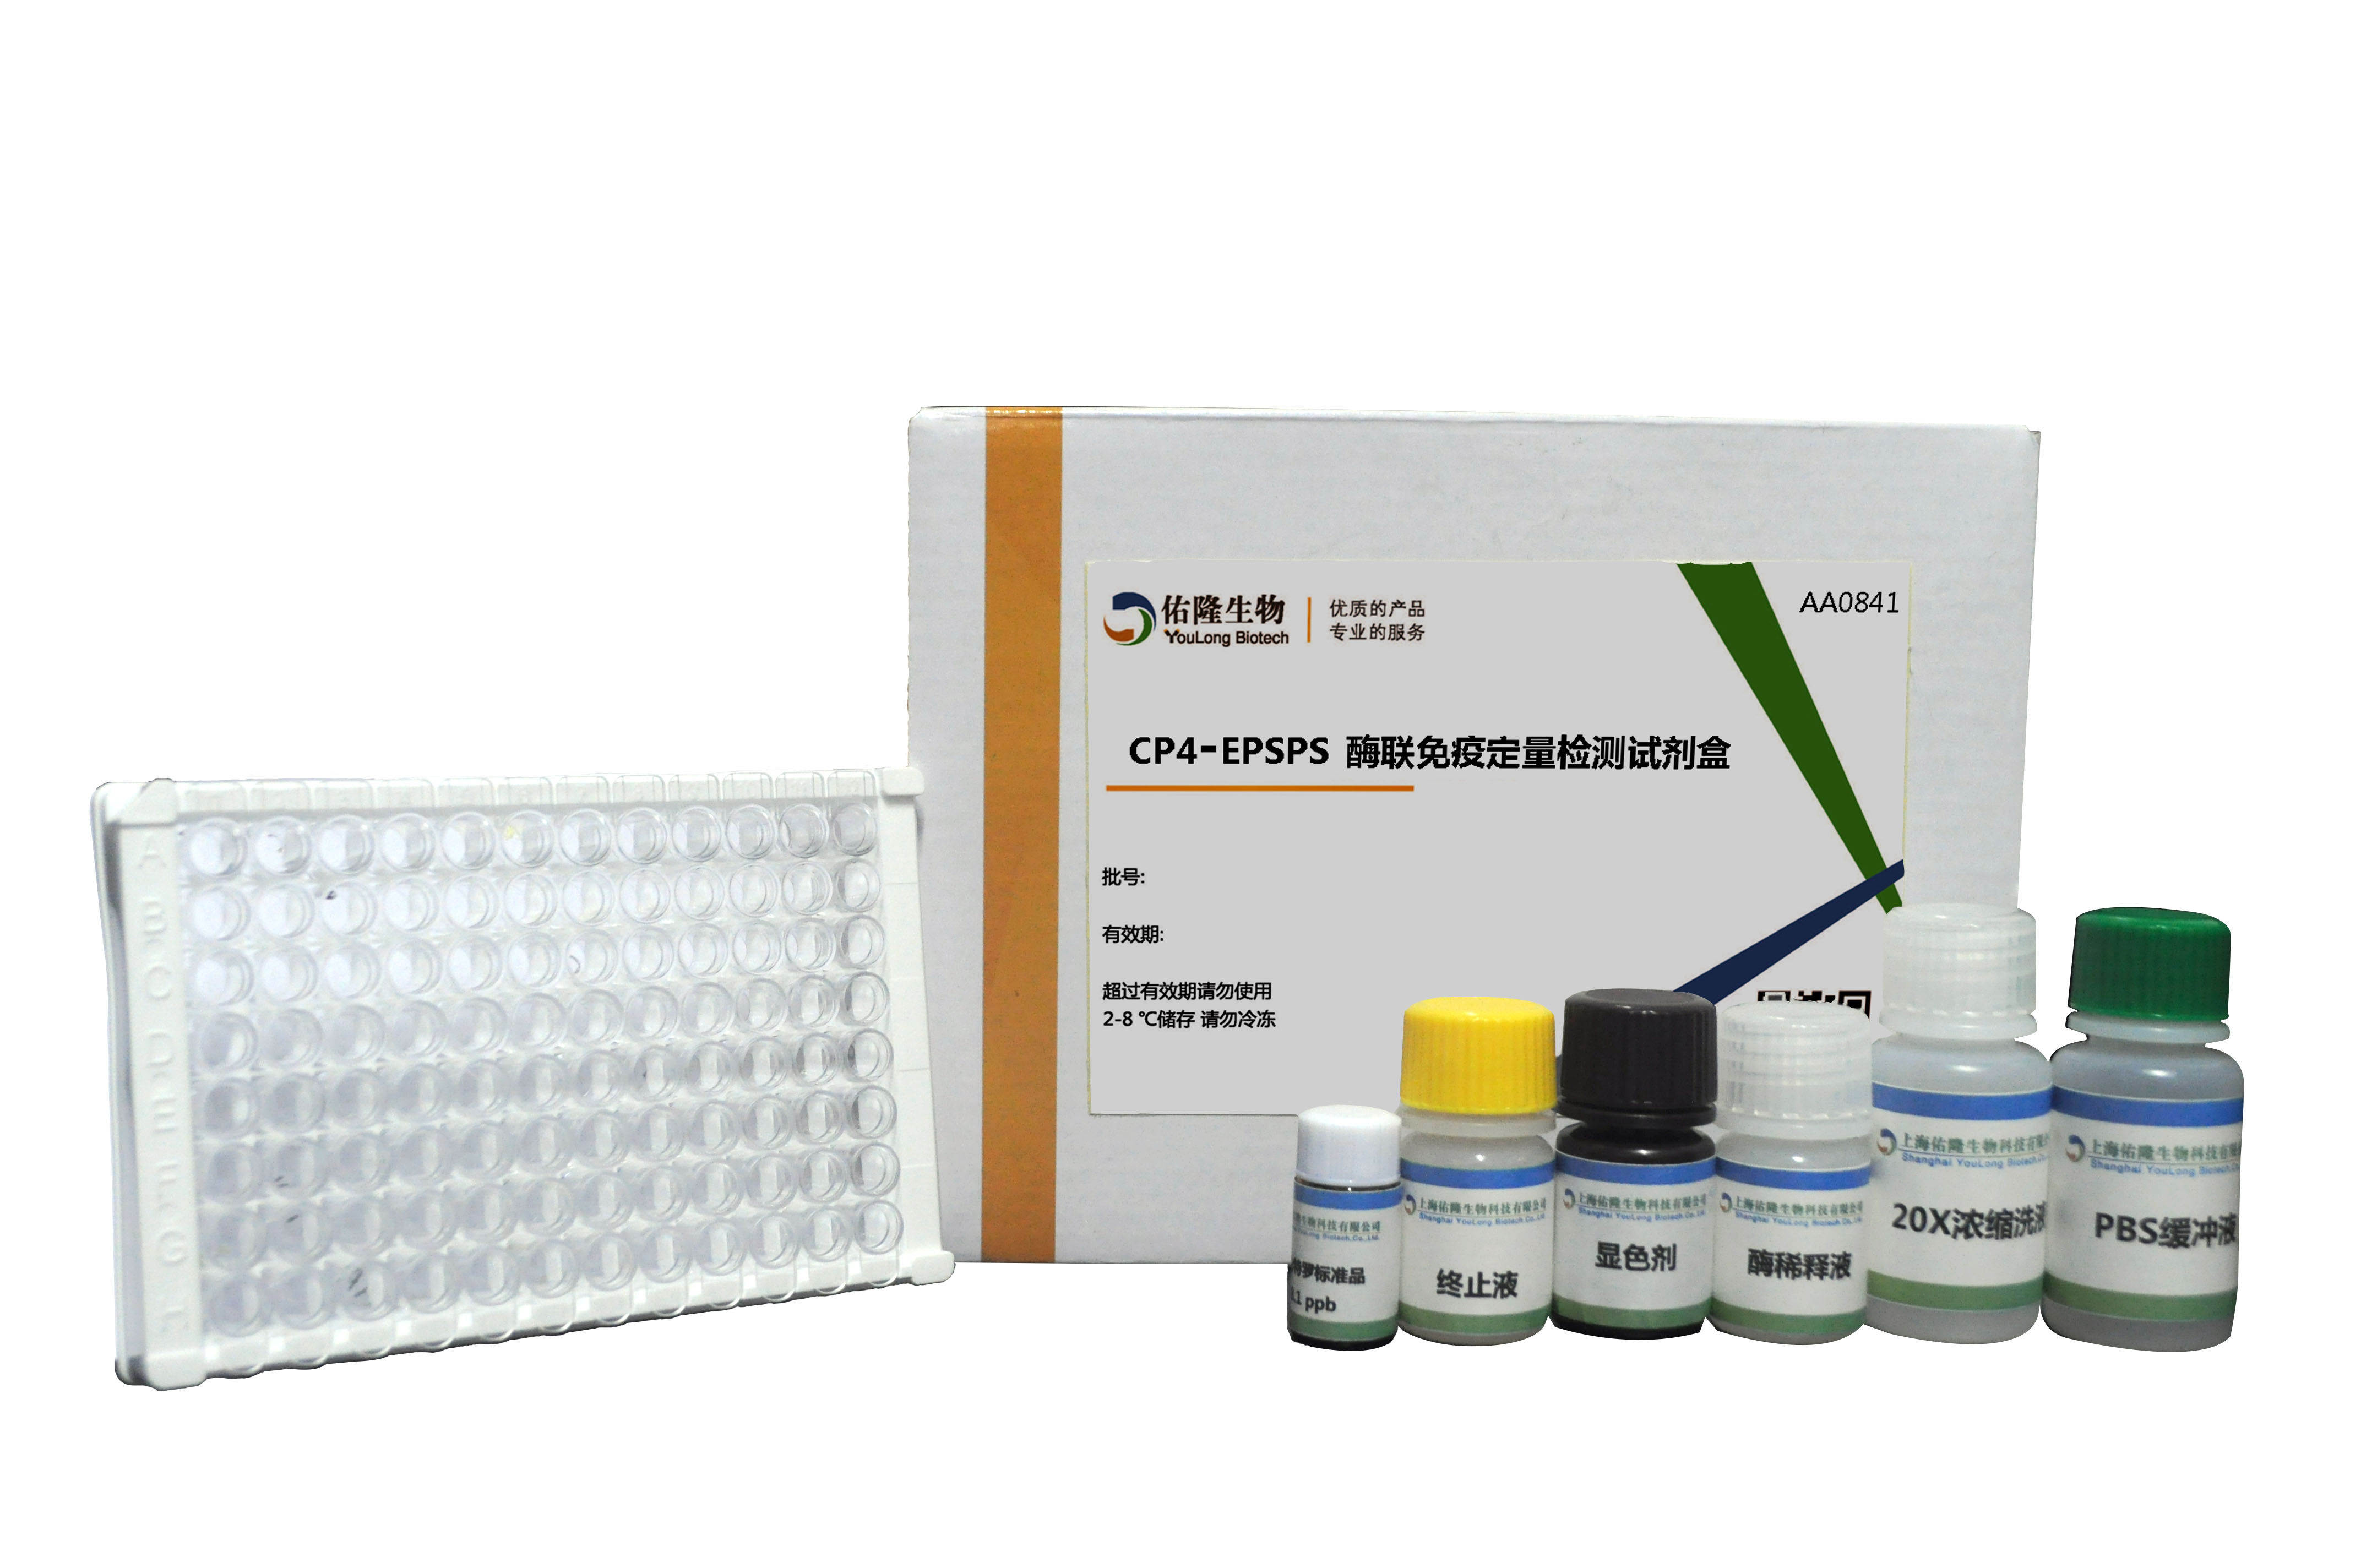 CP4 EPSPS 酶联免疫定量检测试剂盒